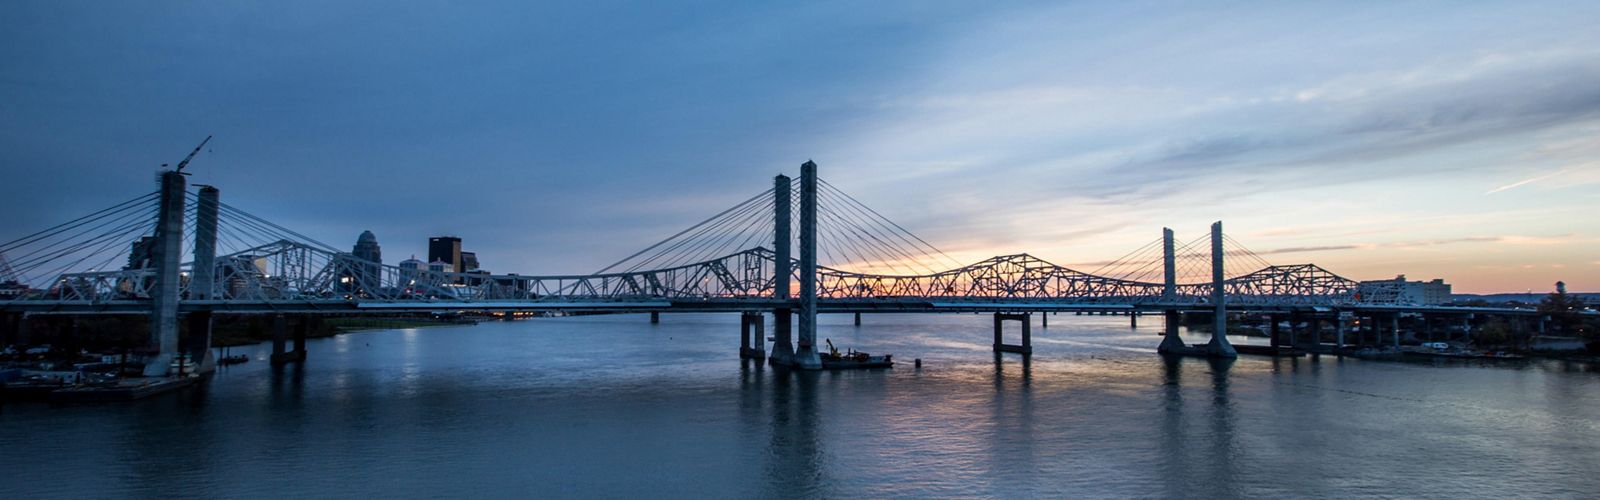 View of the Second Street Bridge (George Rogers Clark Memorial Bridge) over the Ohio River in Louisville, Kentucky.